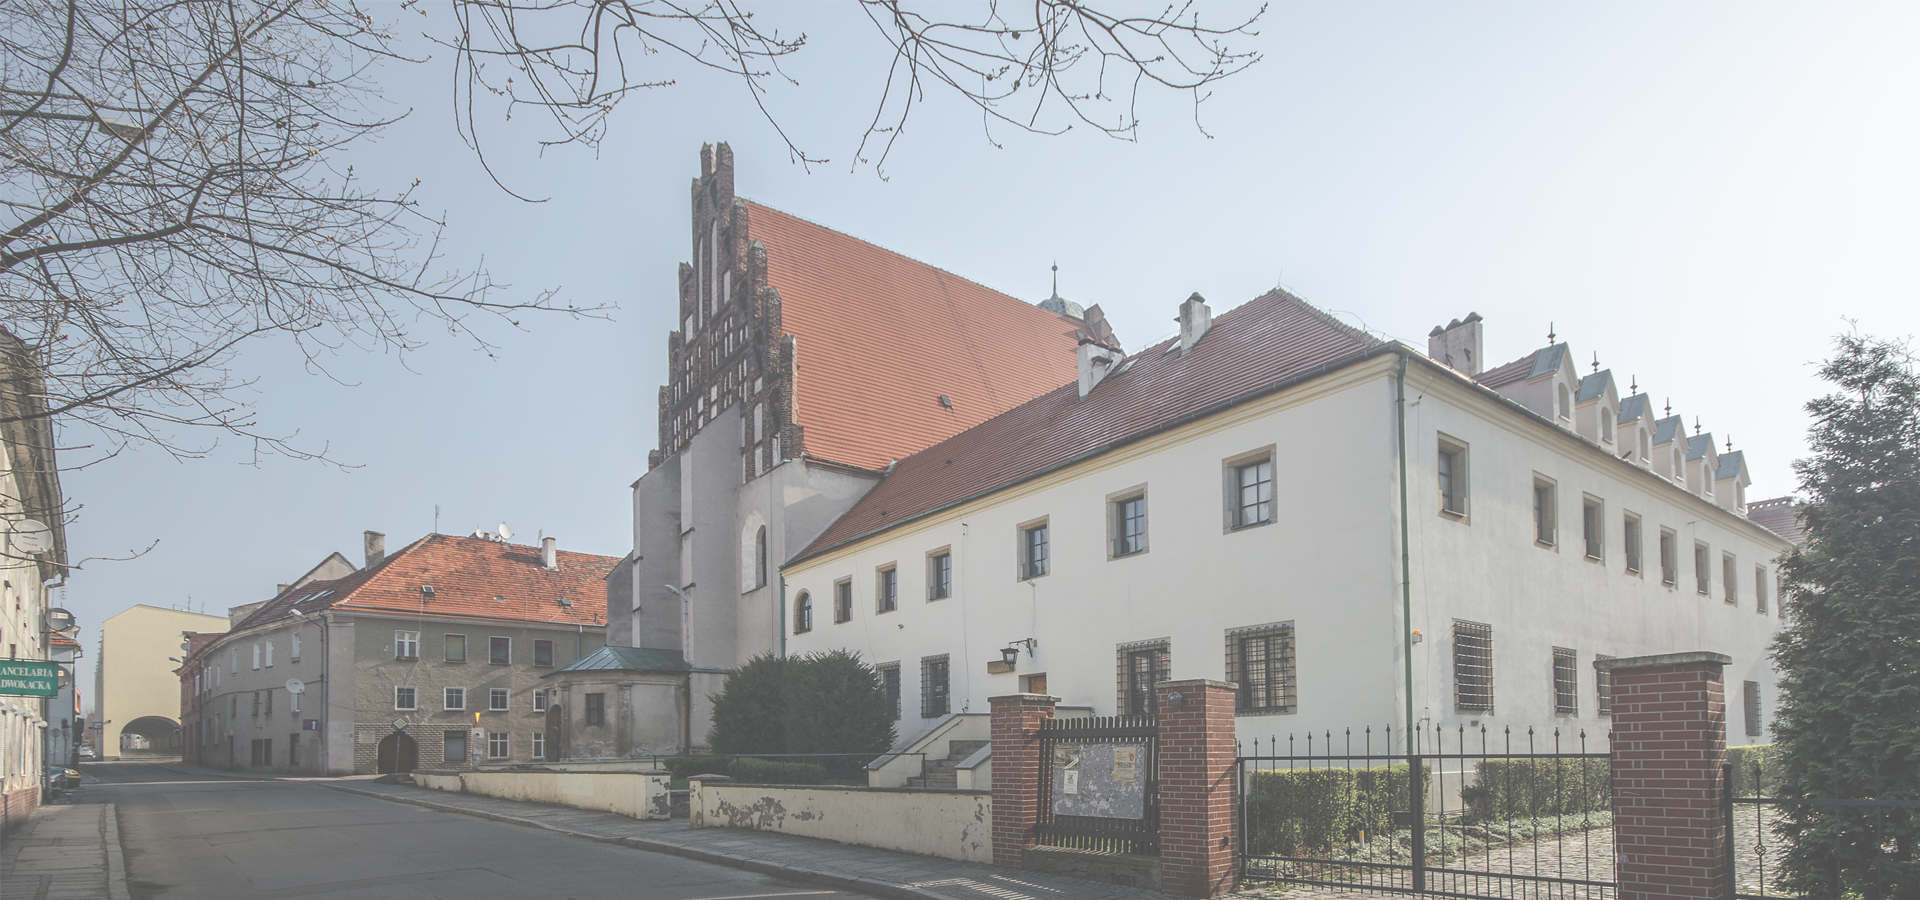 <b>Jawor, Lower Silesian Voivodeship, Poland</b>